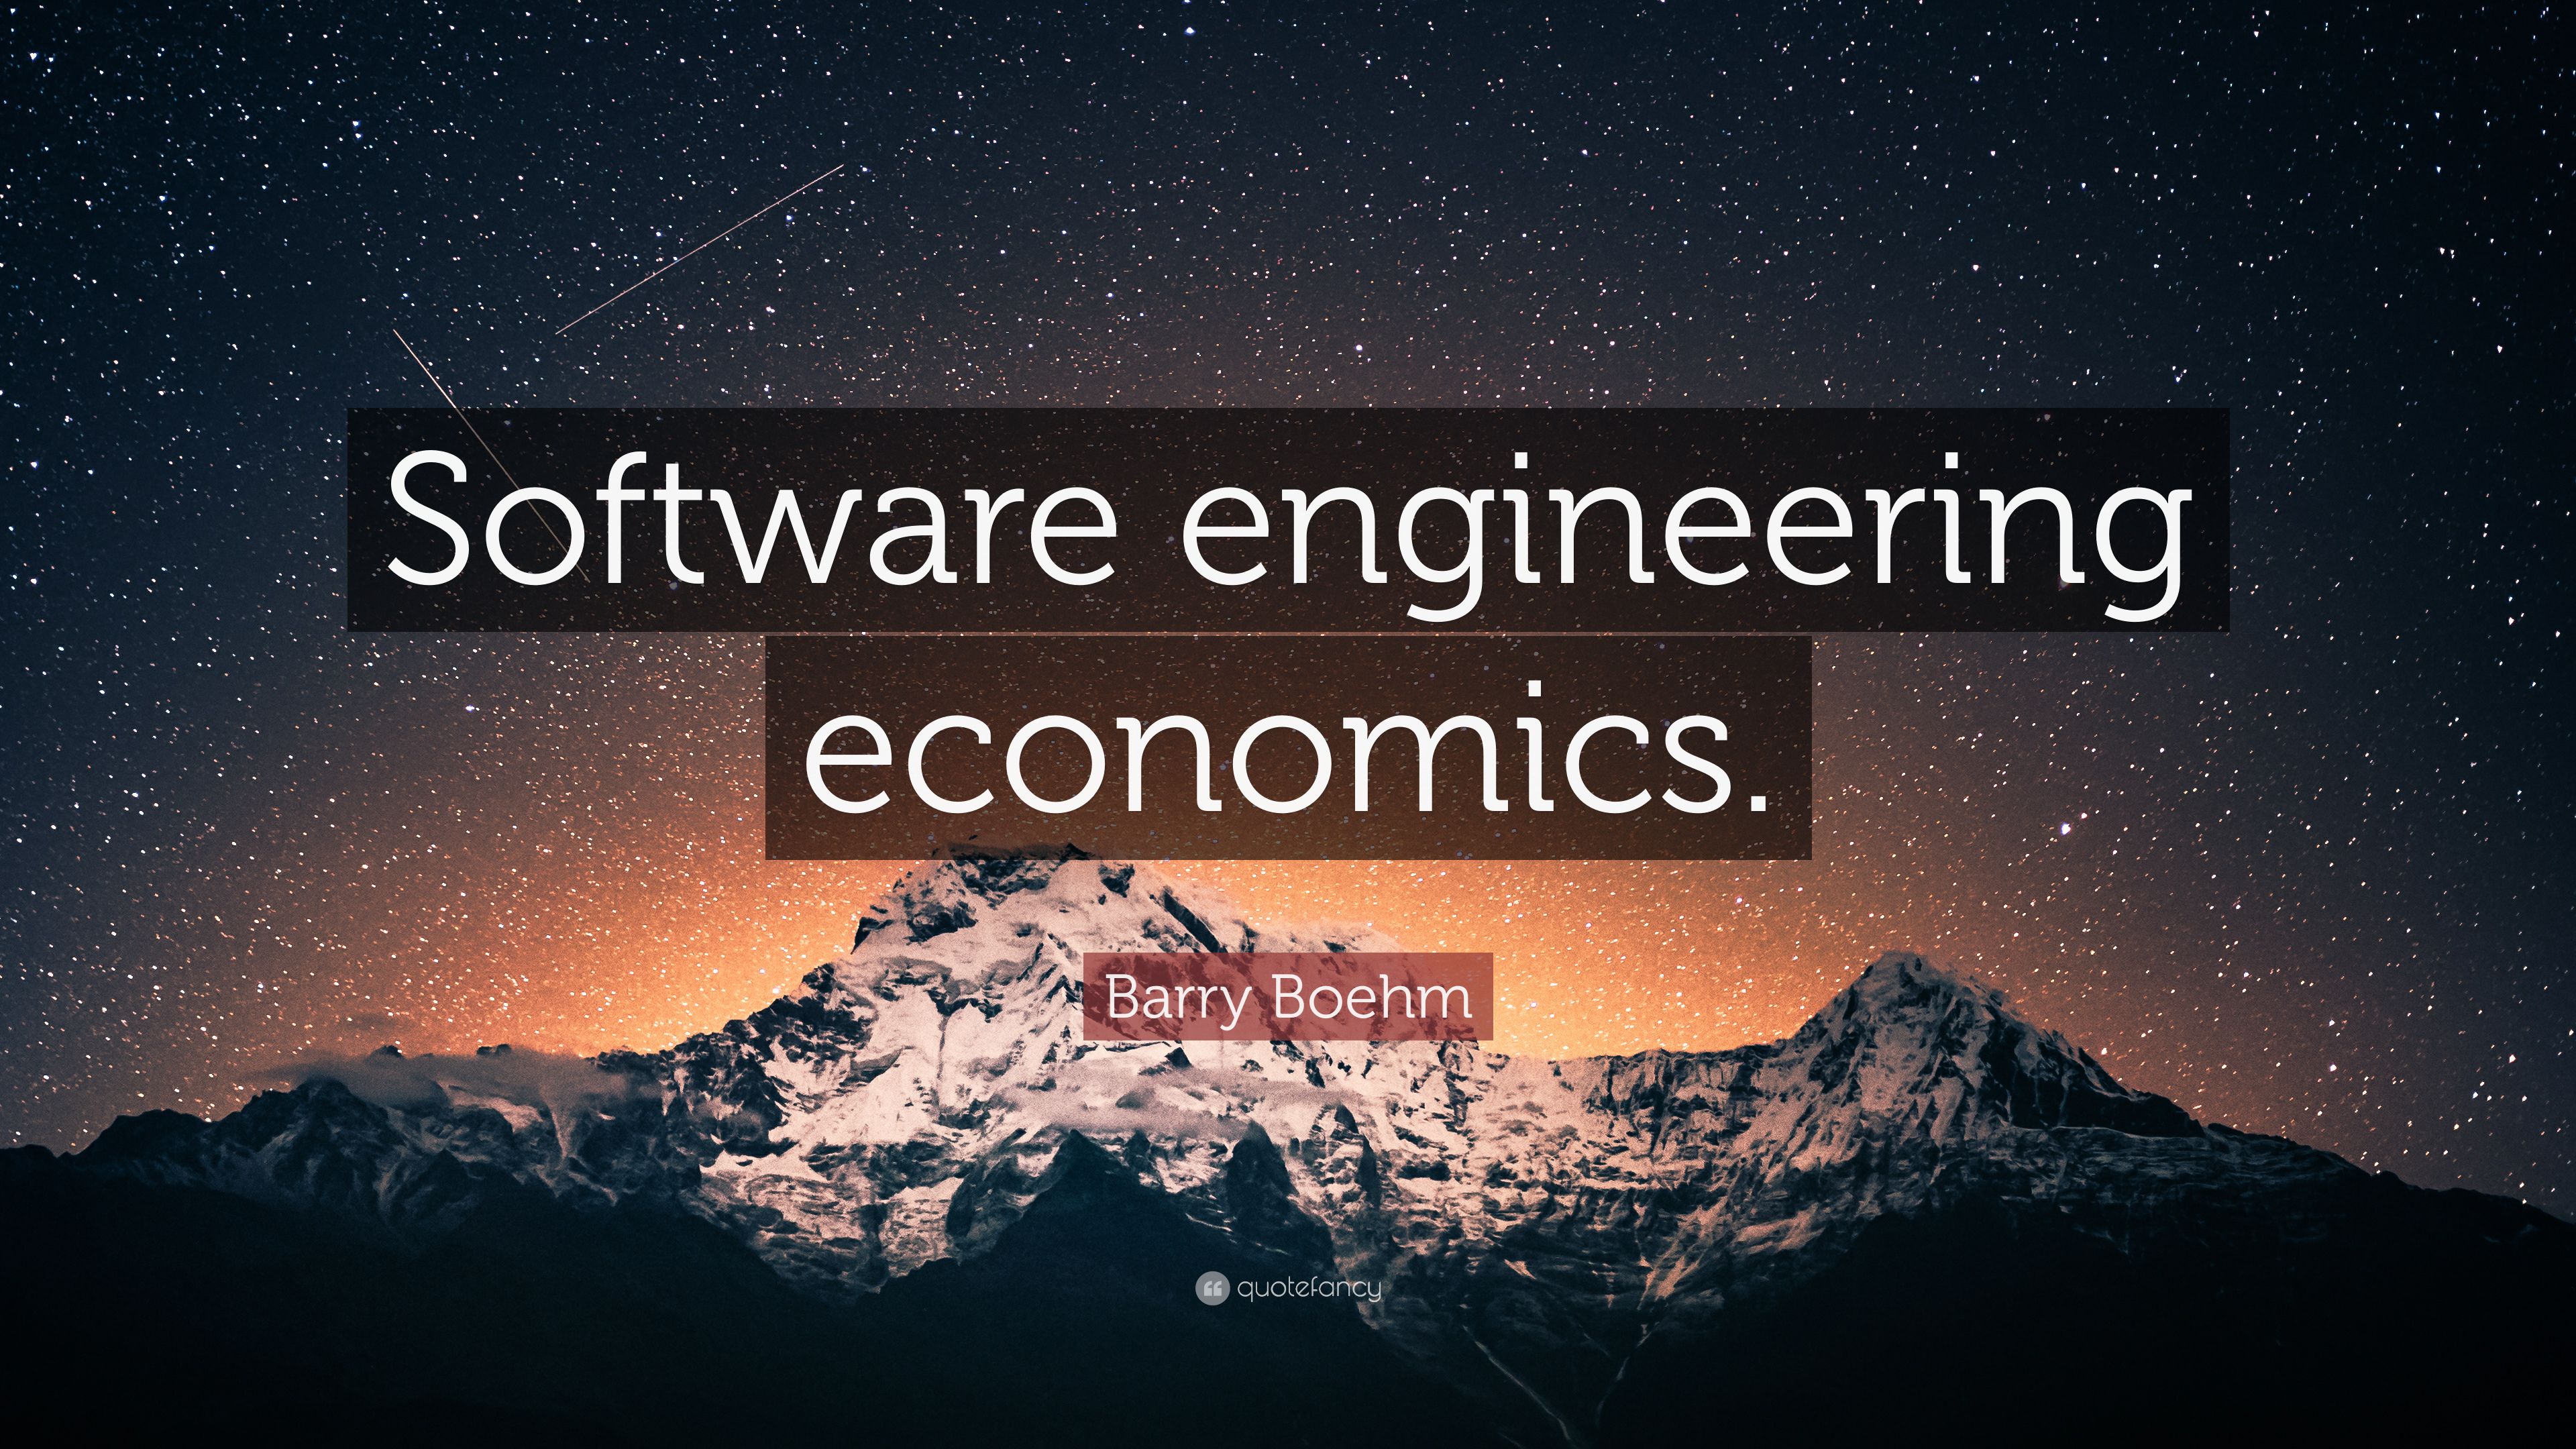 Barry Boehm Quote: “Software engineering economics.” (7 wallpaper)